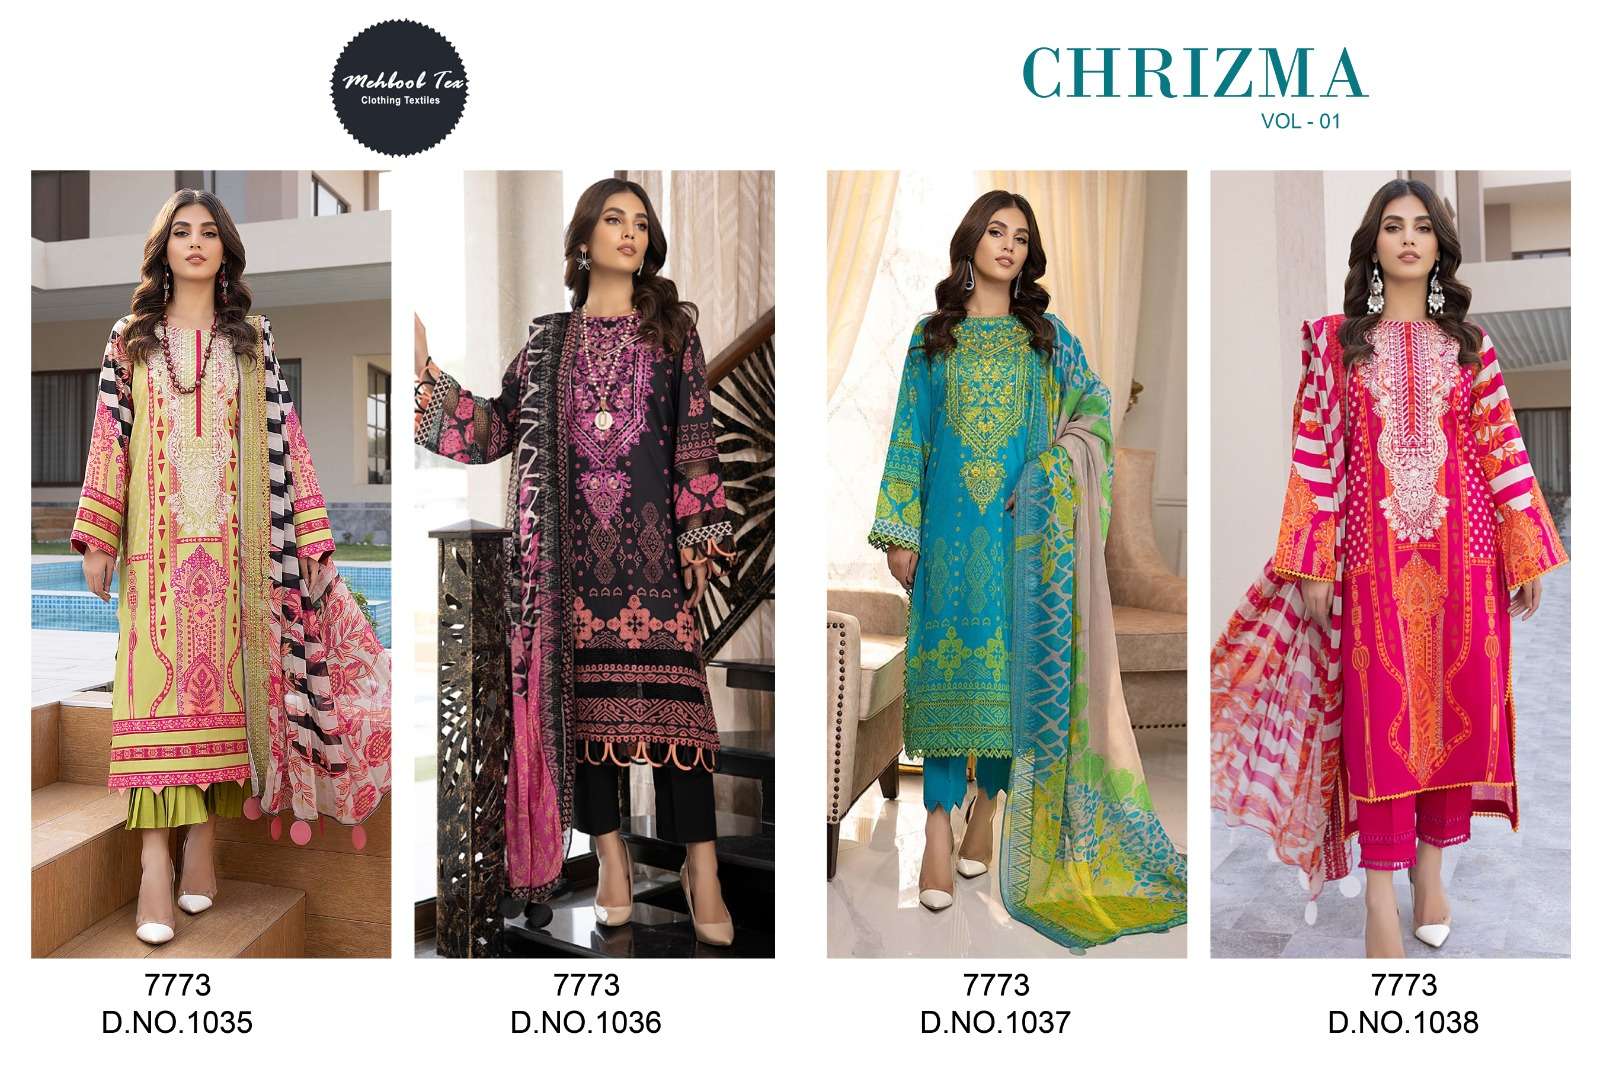 mehboob tex chrizma vol-1 7773 series unstich designer pakistani salwar kameez in india